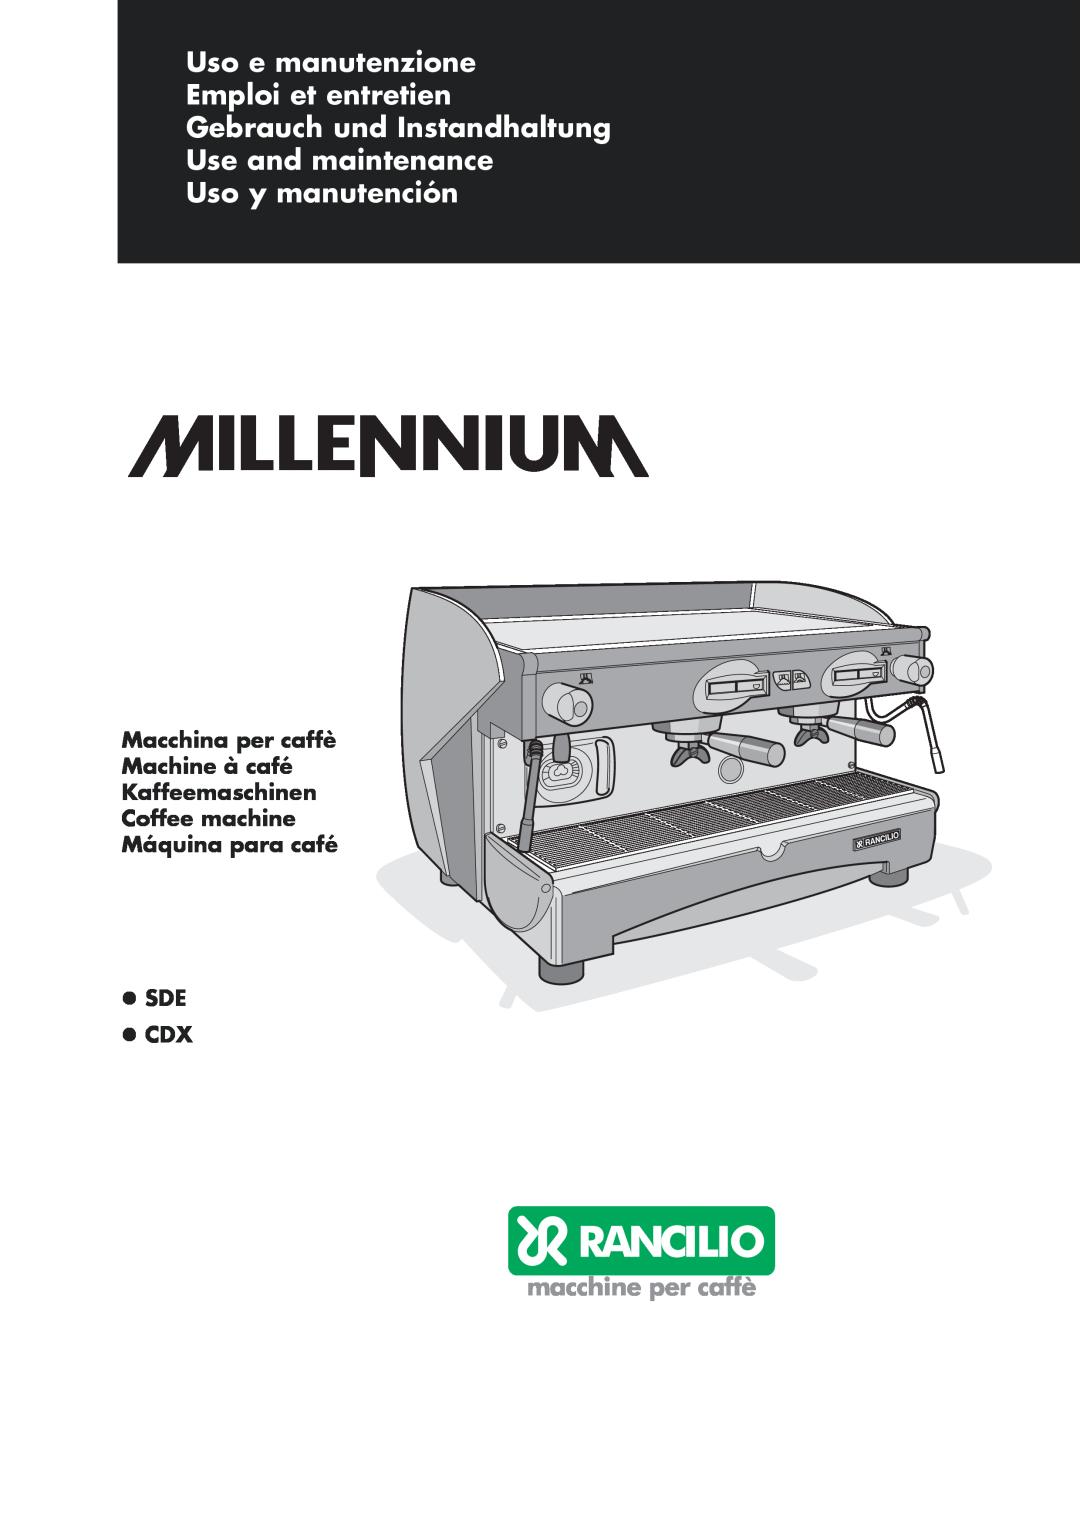 Rancilio Millennium manual Macchina per caffè Machine à café Kaffeemaschinen Coffee machine, Máquina para café SDE CDX 